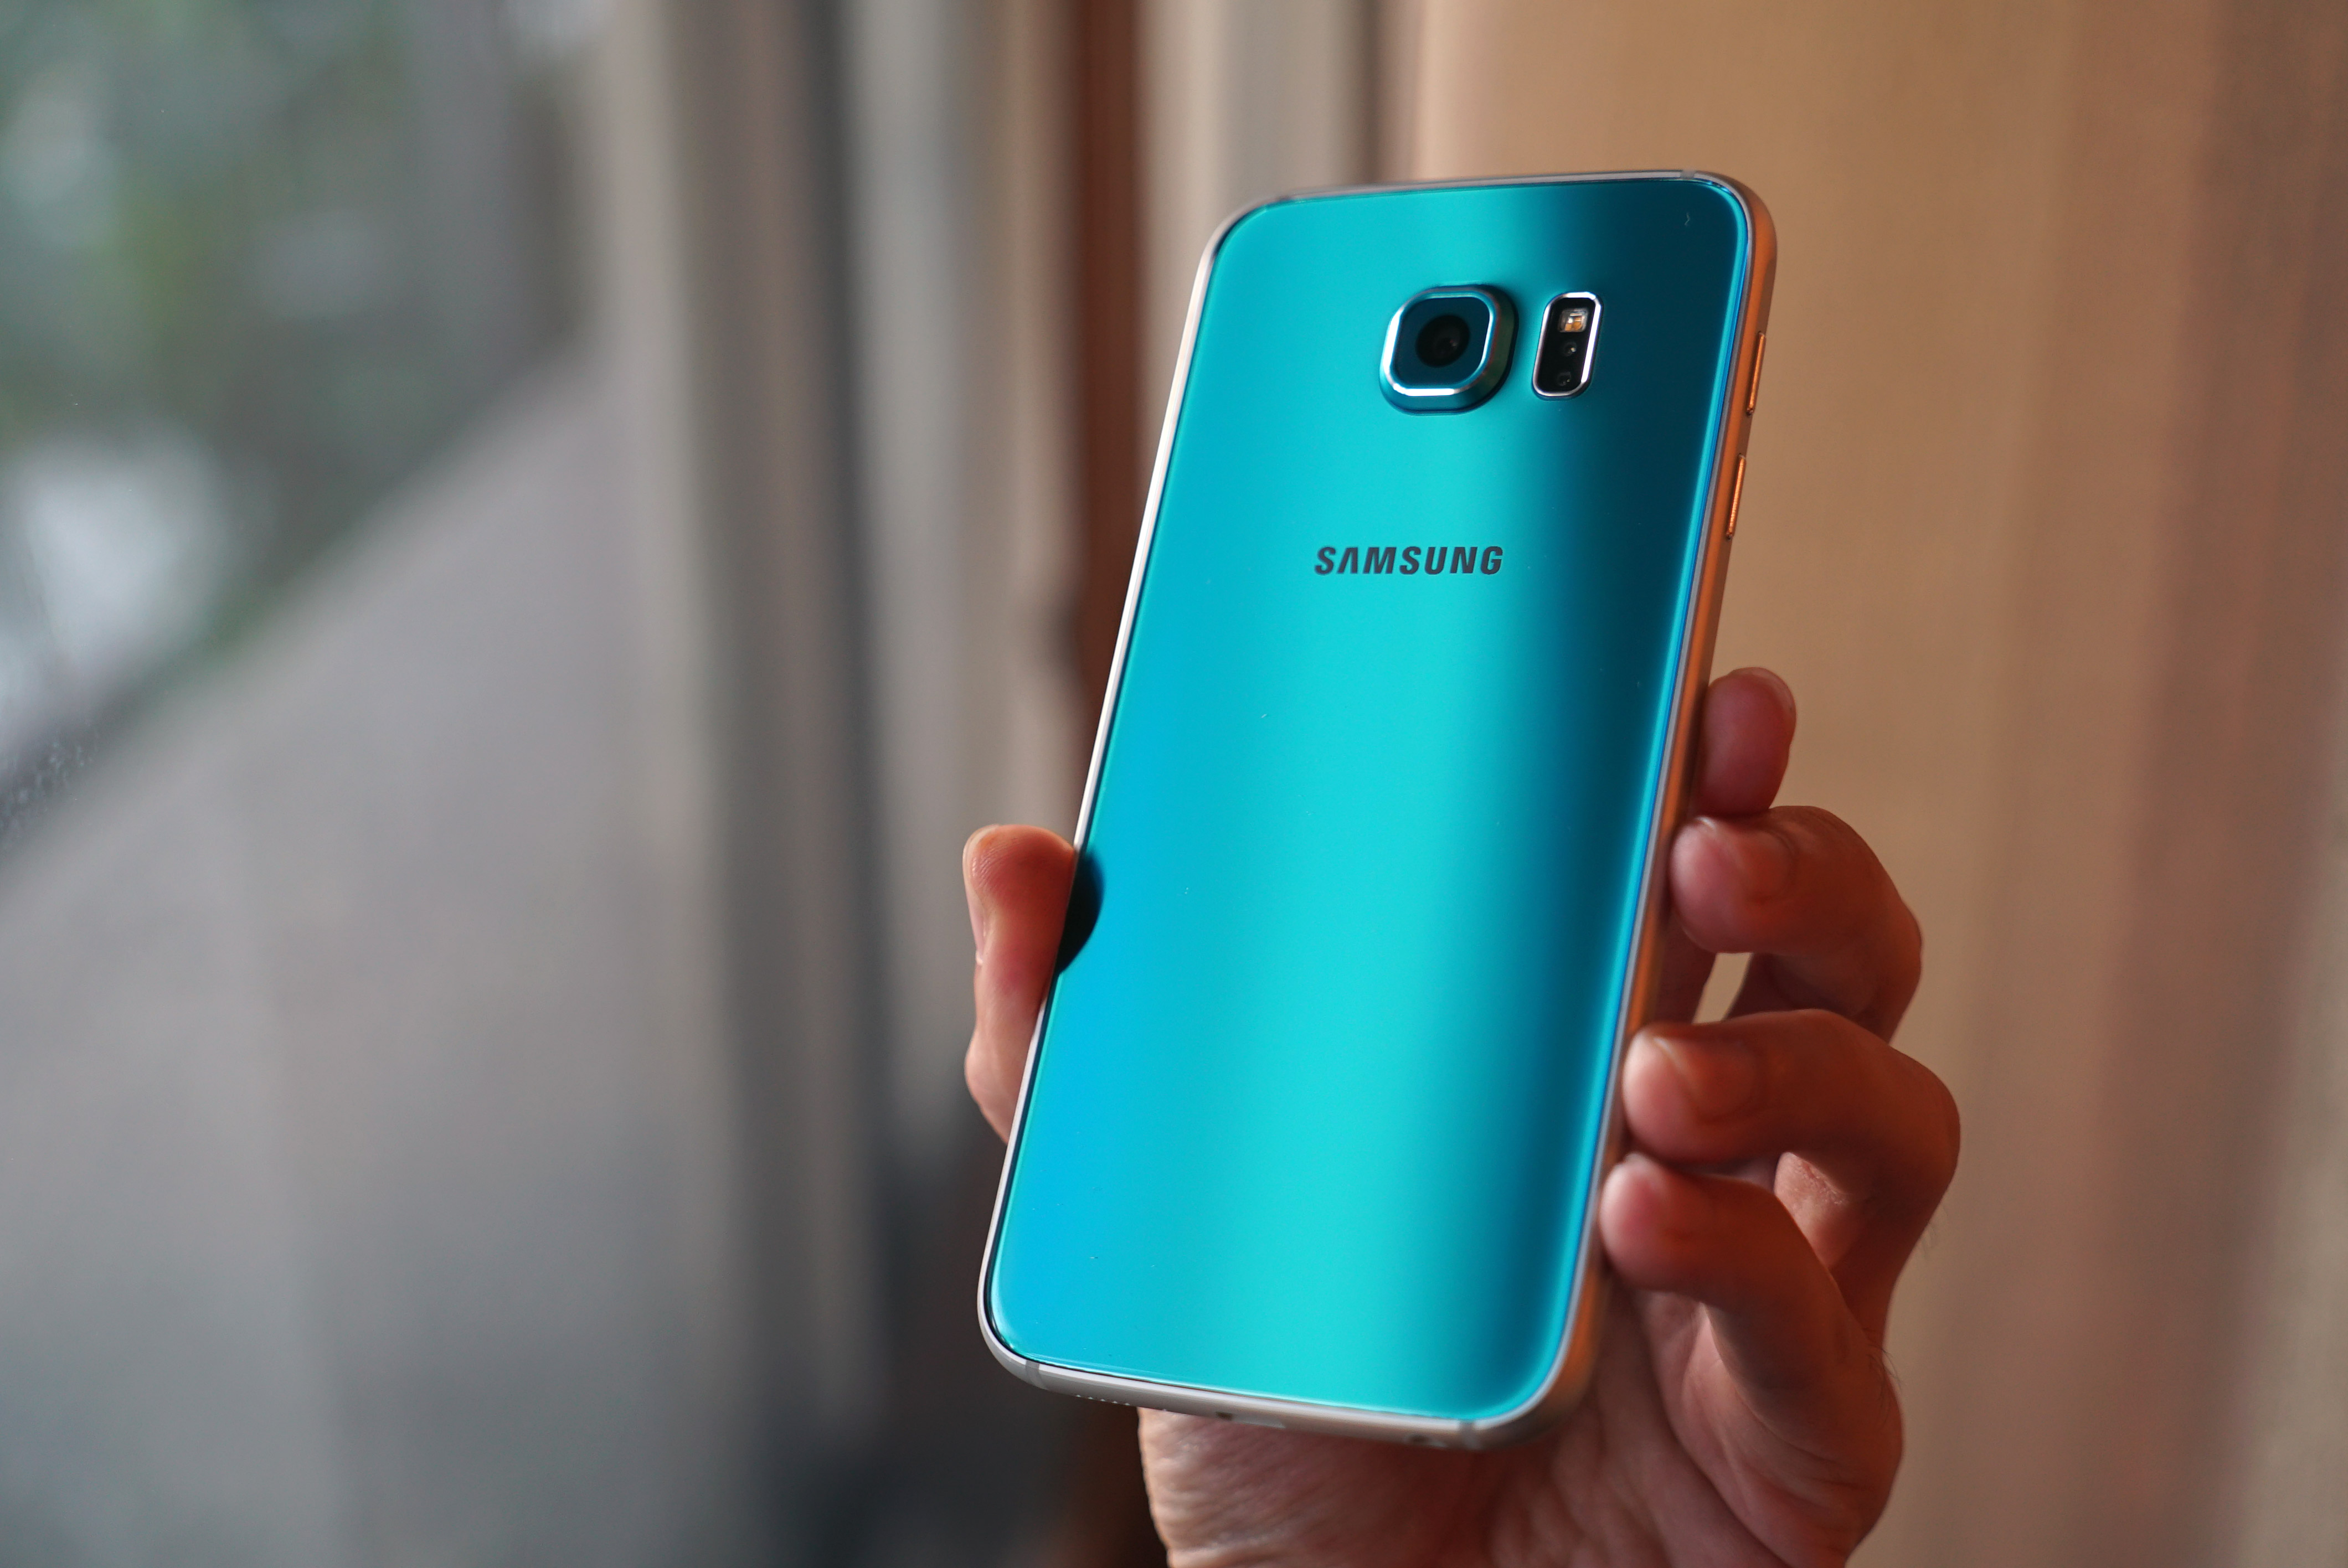 Samsung-Galaxy-S6-Blue